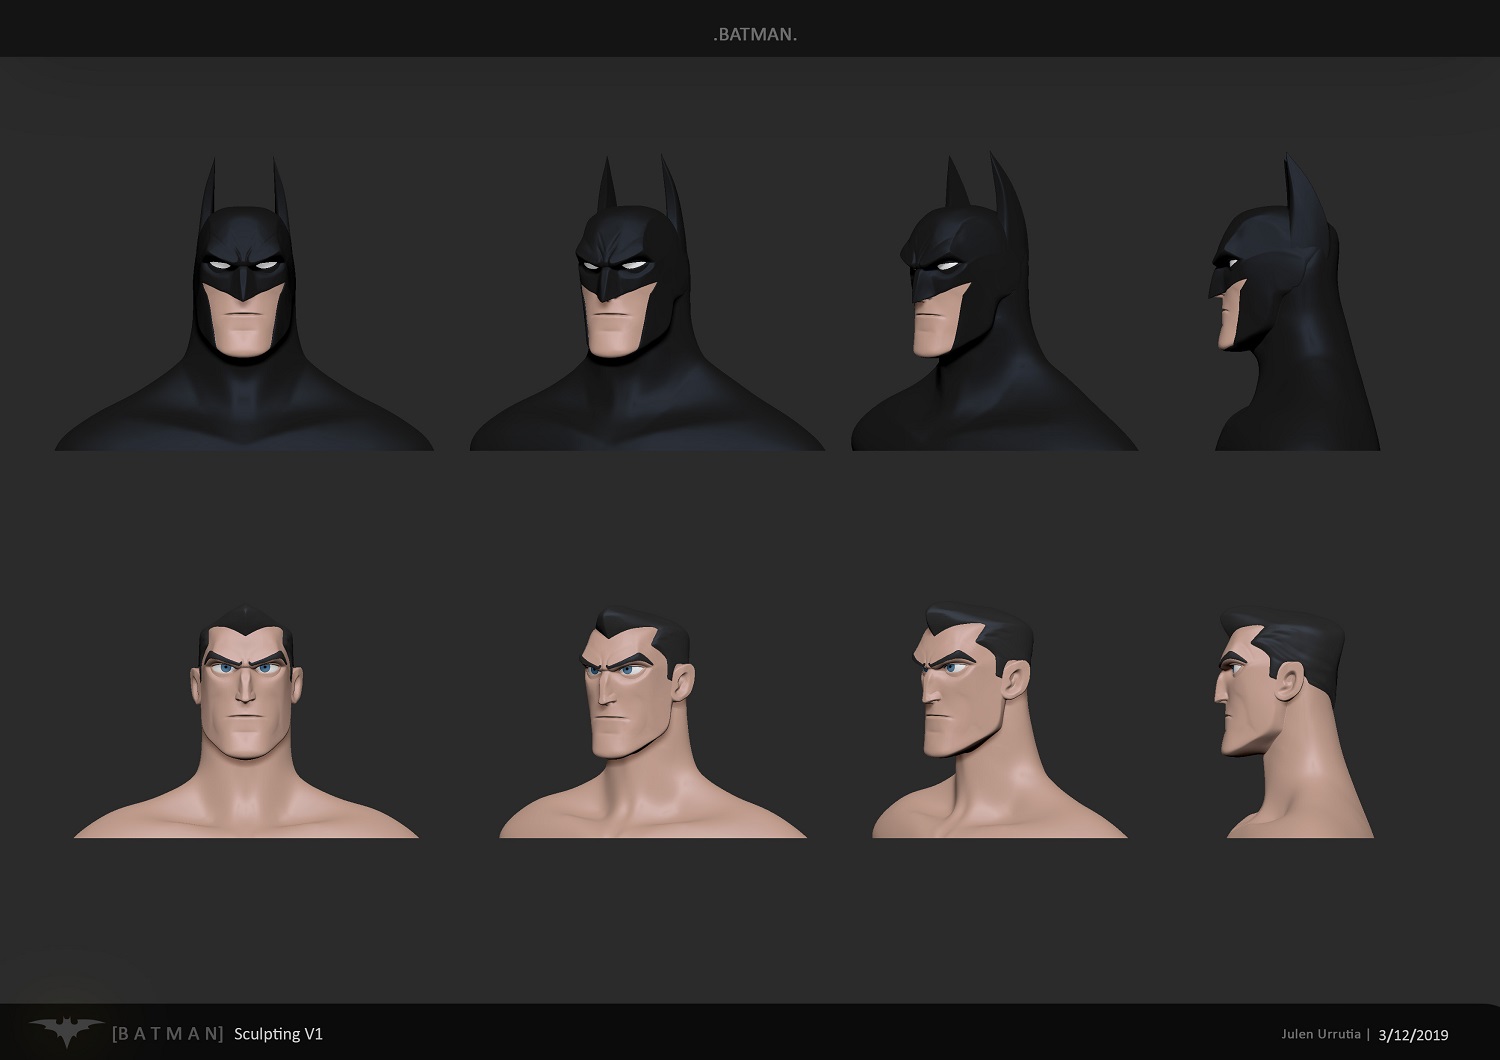 Julen Urrutia artista digital reimagina Batman atraves de computacao grafica 6